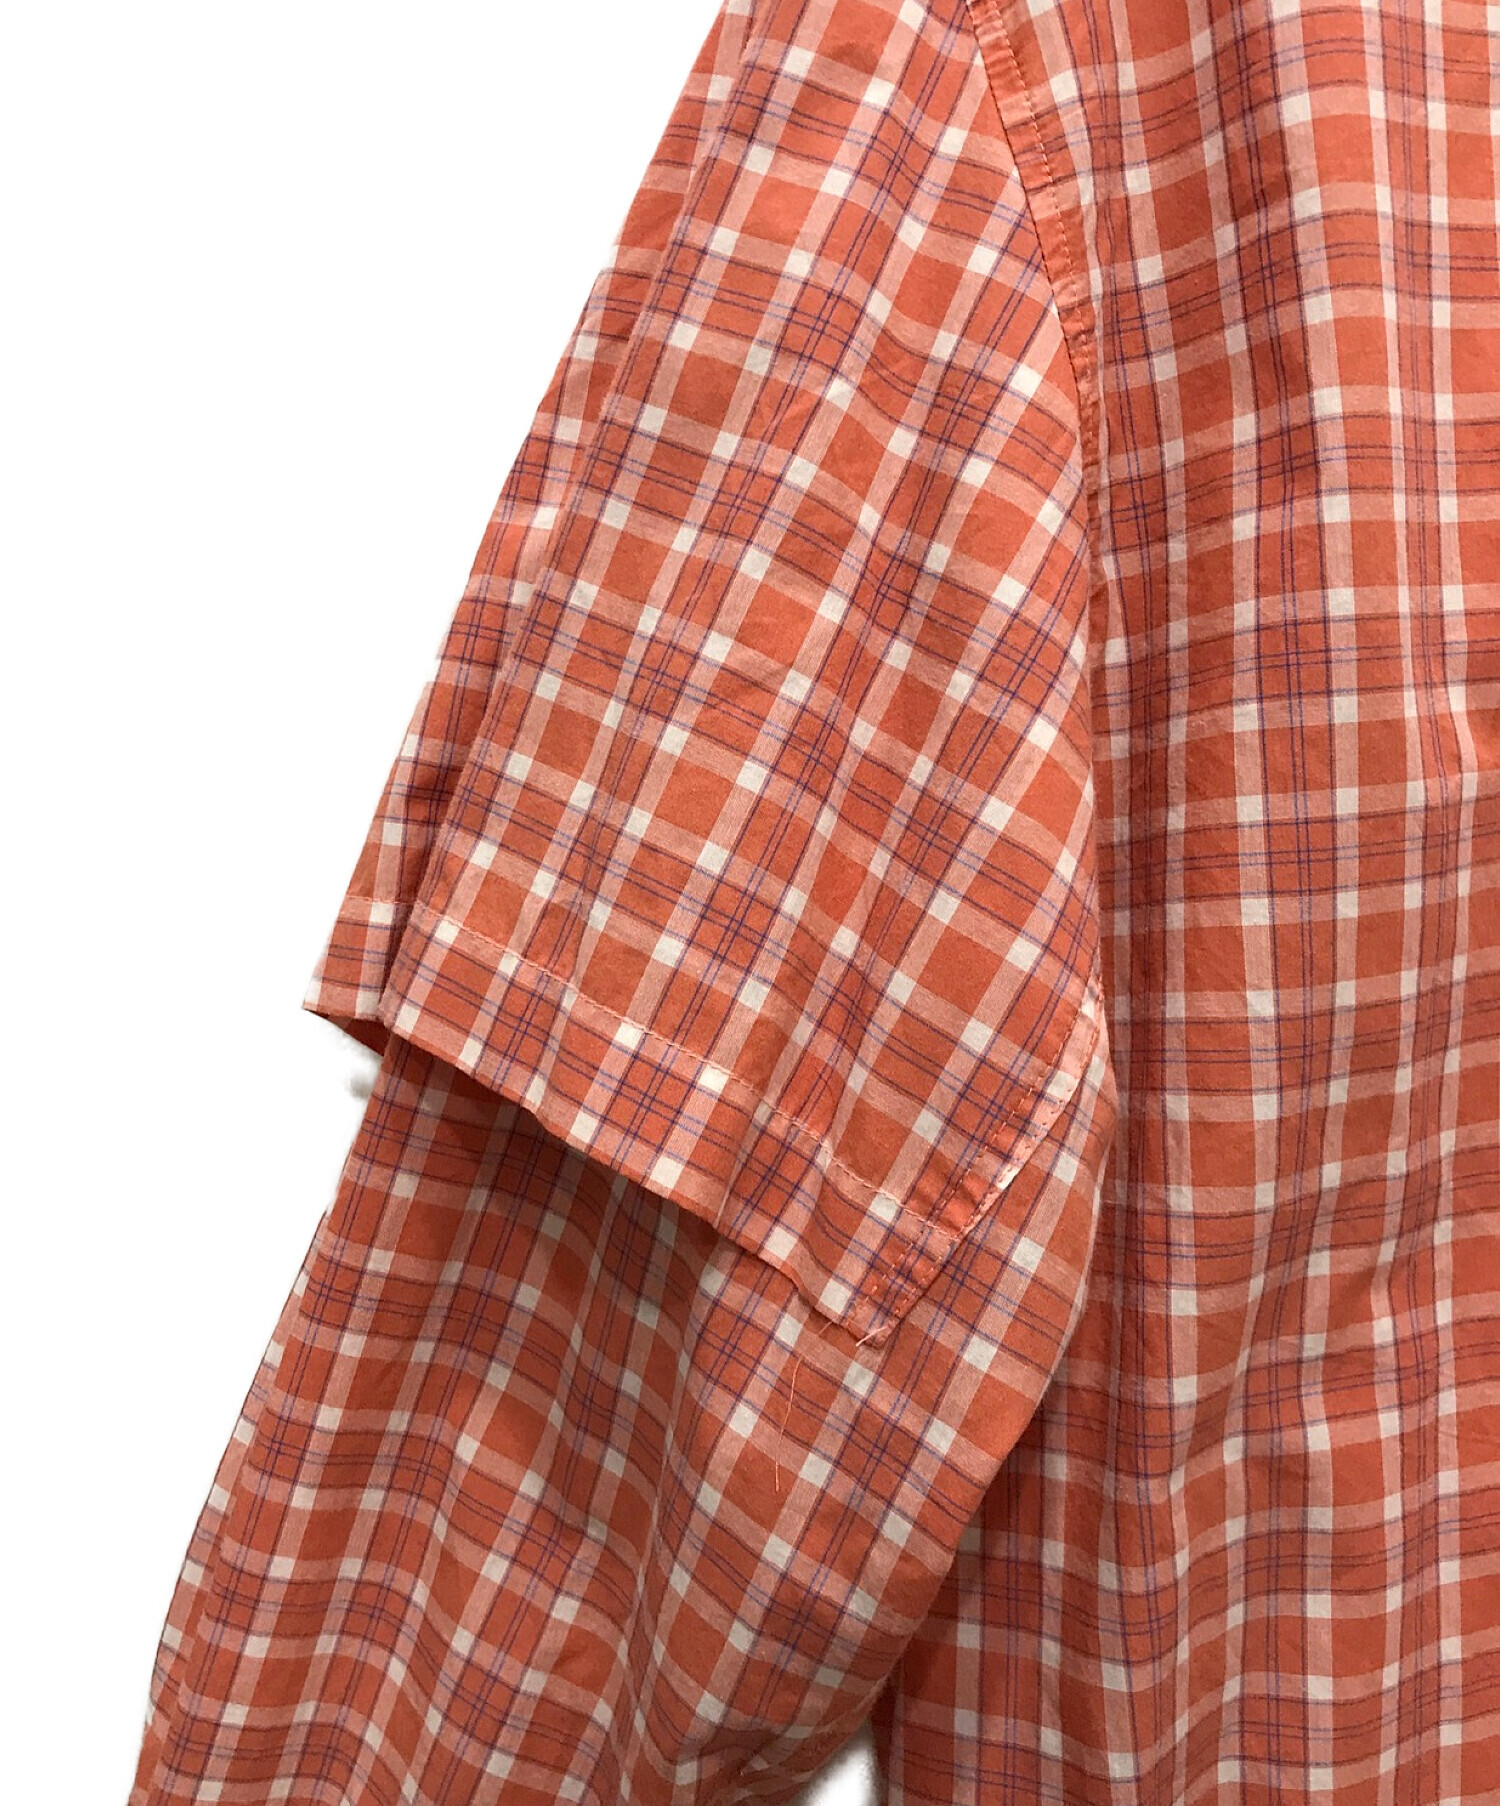 Name. (ネーム) レイヤードパターンチェックシャツ オレンジ サイズ:1